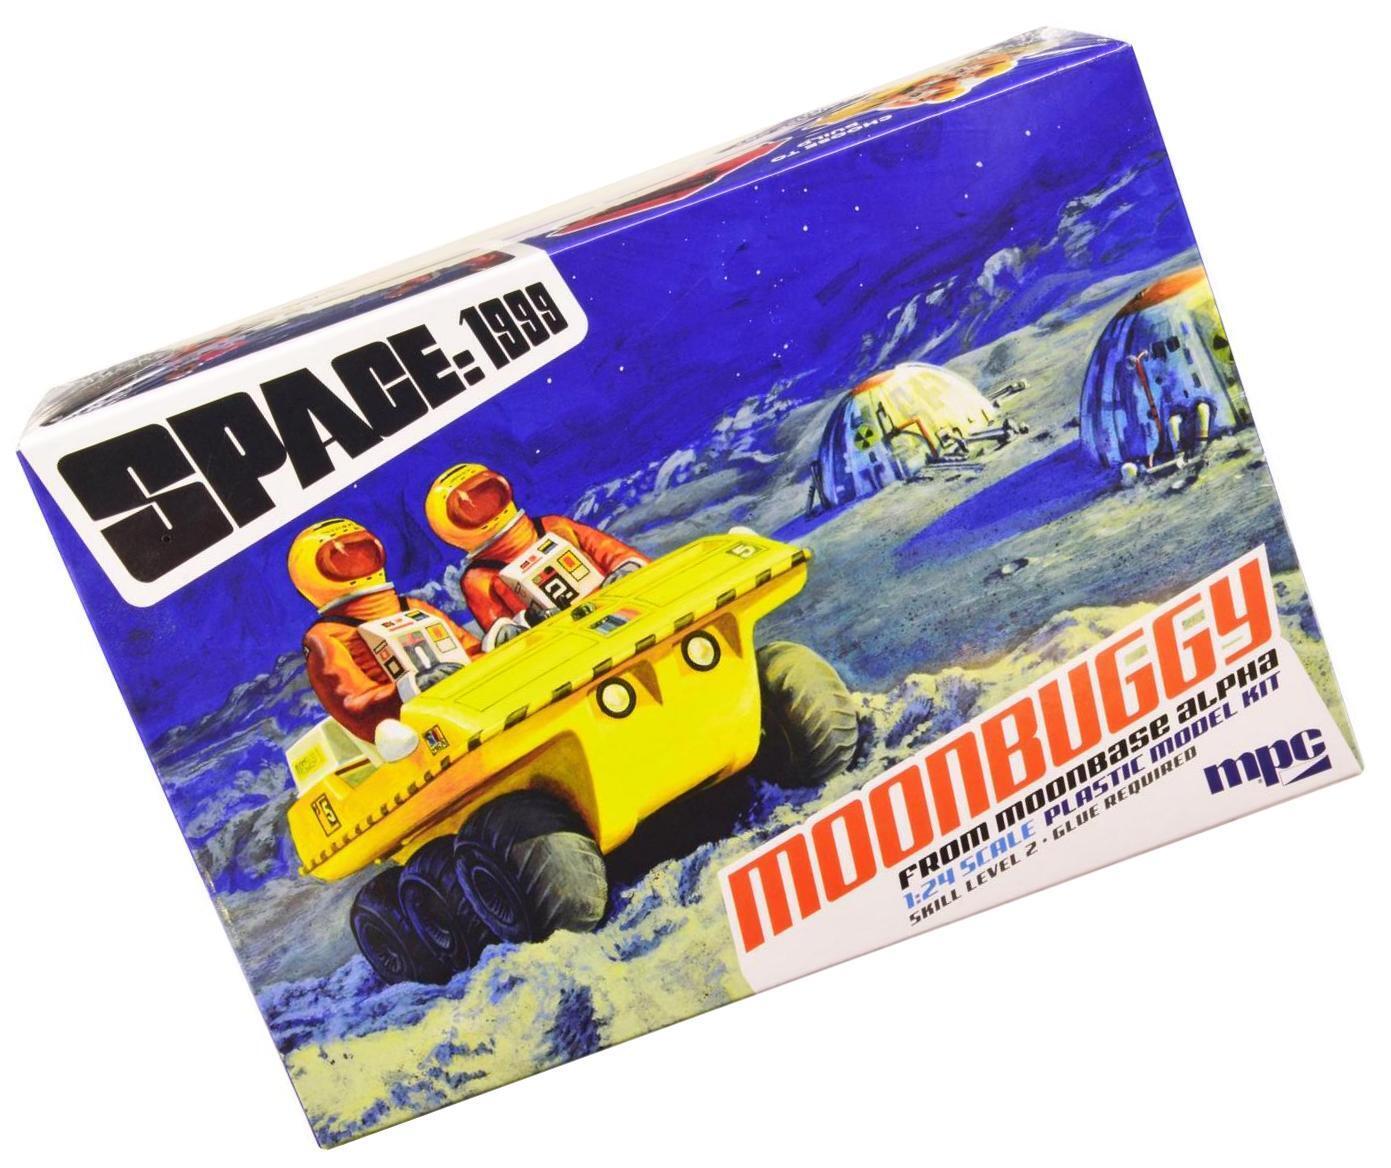 Skill 2 Moonbuggy/Amphicat 6-Wheeled ATV Space: 1999 (1975-1977) TV Show 2-in-1